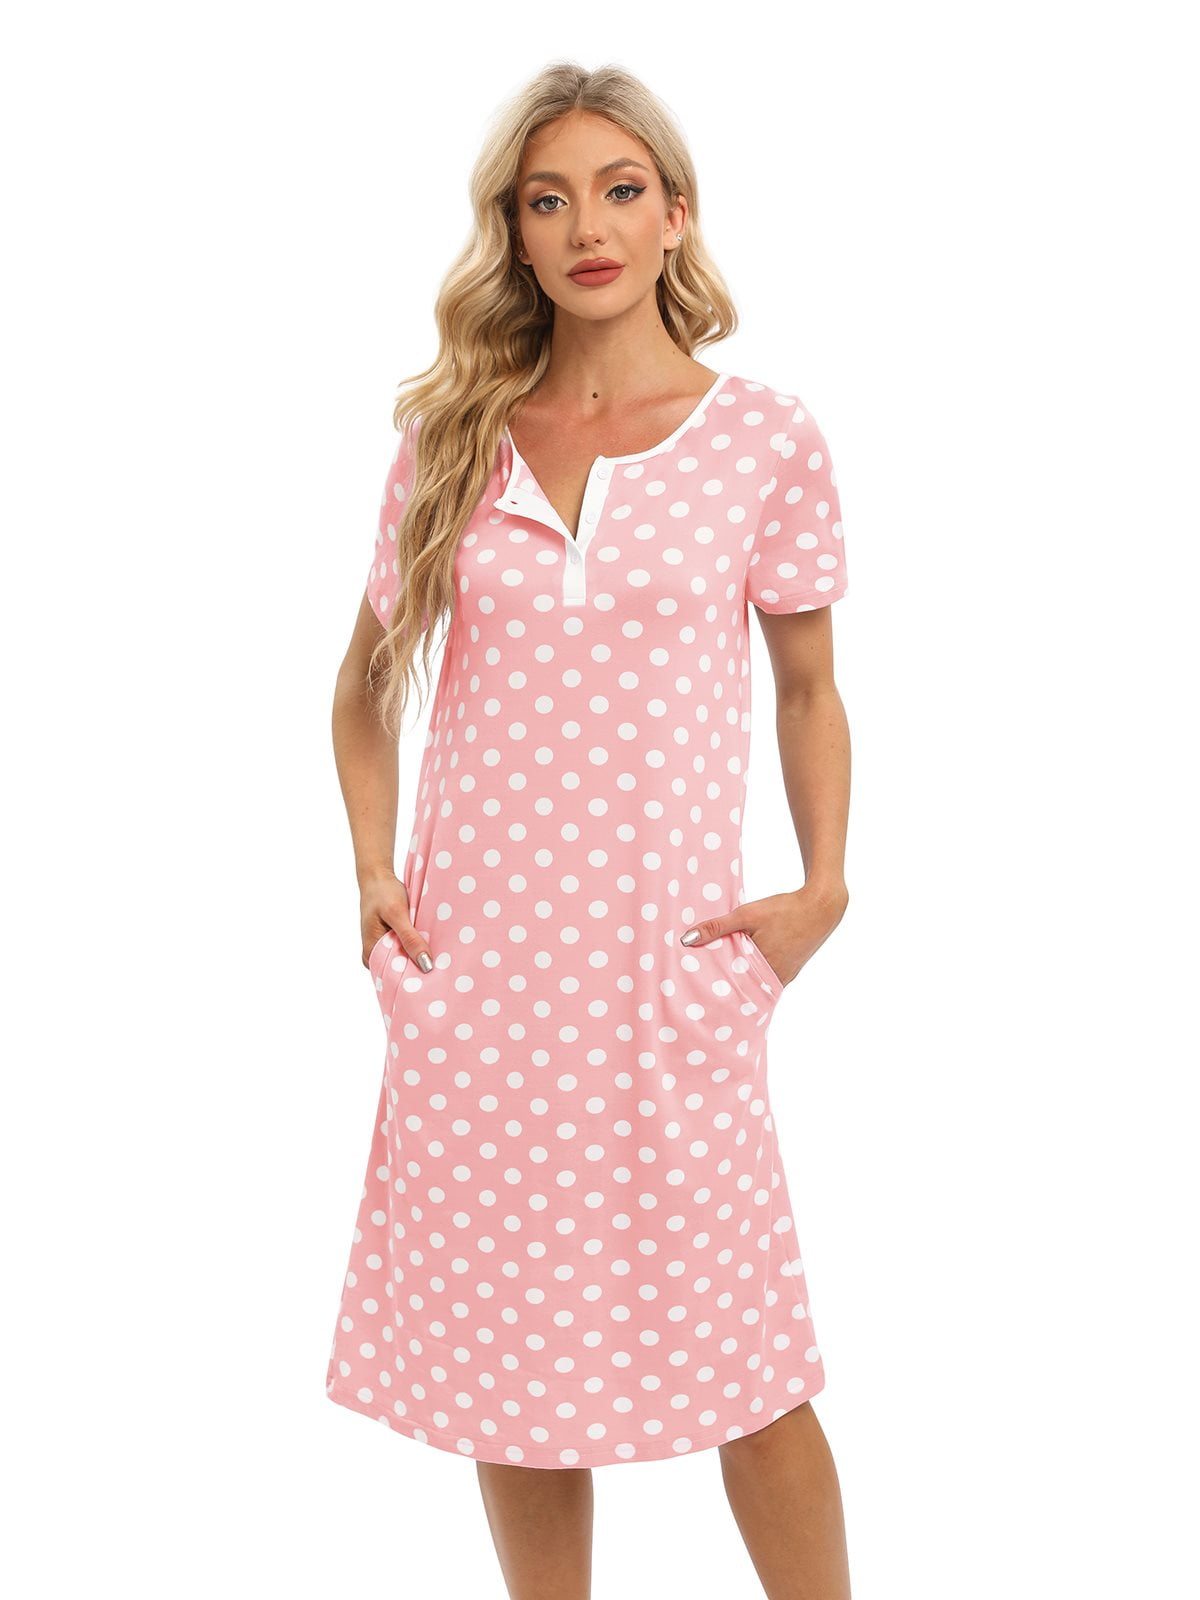 EFINNY Women\'s Nightgown Short Sleeve Soft Comfy Sleepwear with Pockets  Henley Neck Button Down Nightdress Retro Polka Dot Nightshirt, S-XXL